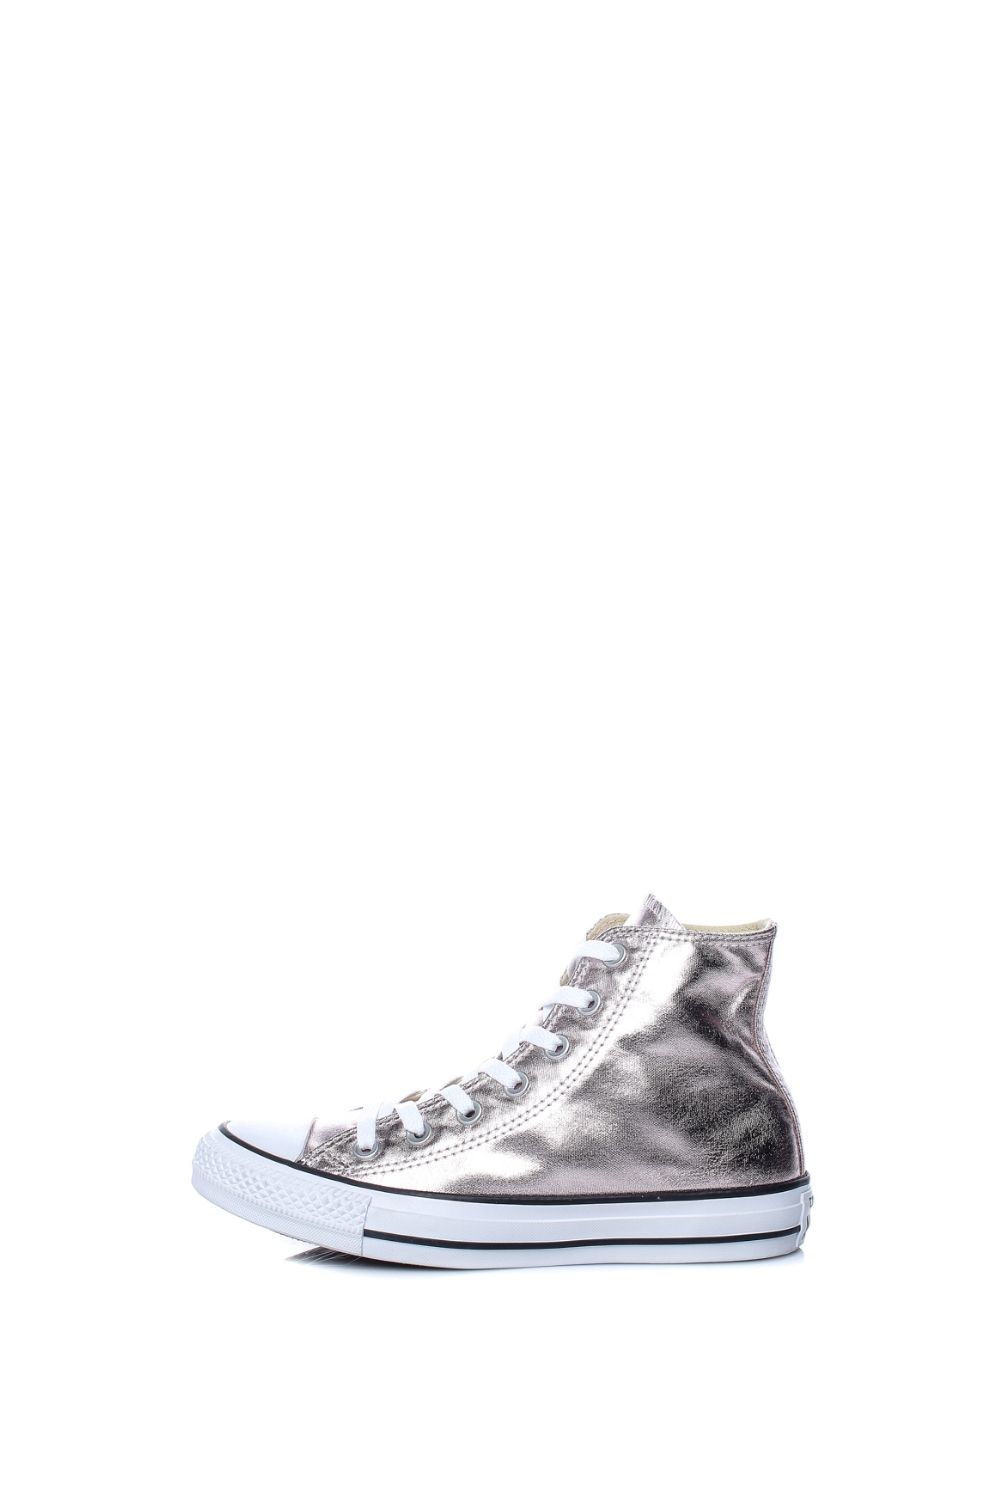 CONVERSE - Unisex παπούτσια Chuck Taylor All Star Hi μεταλλικά Γυναικεία/Παπούτσια/Sneakers